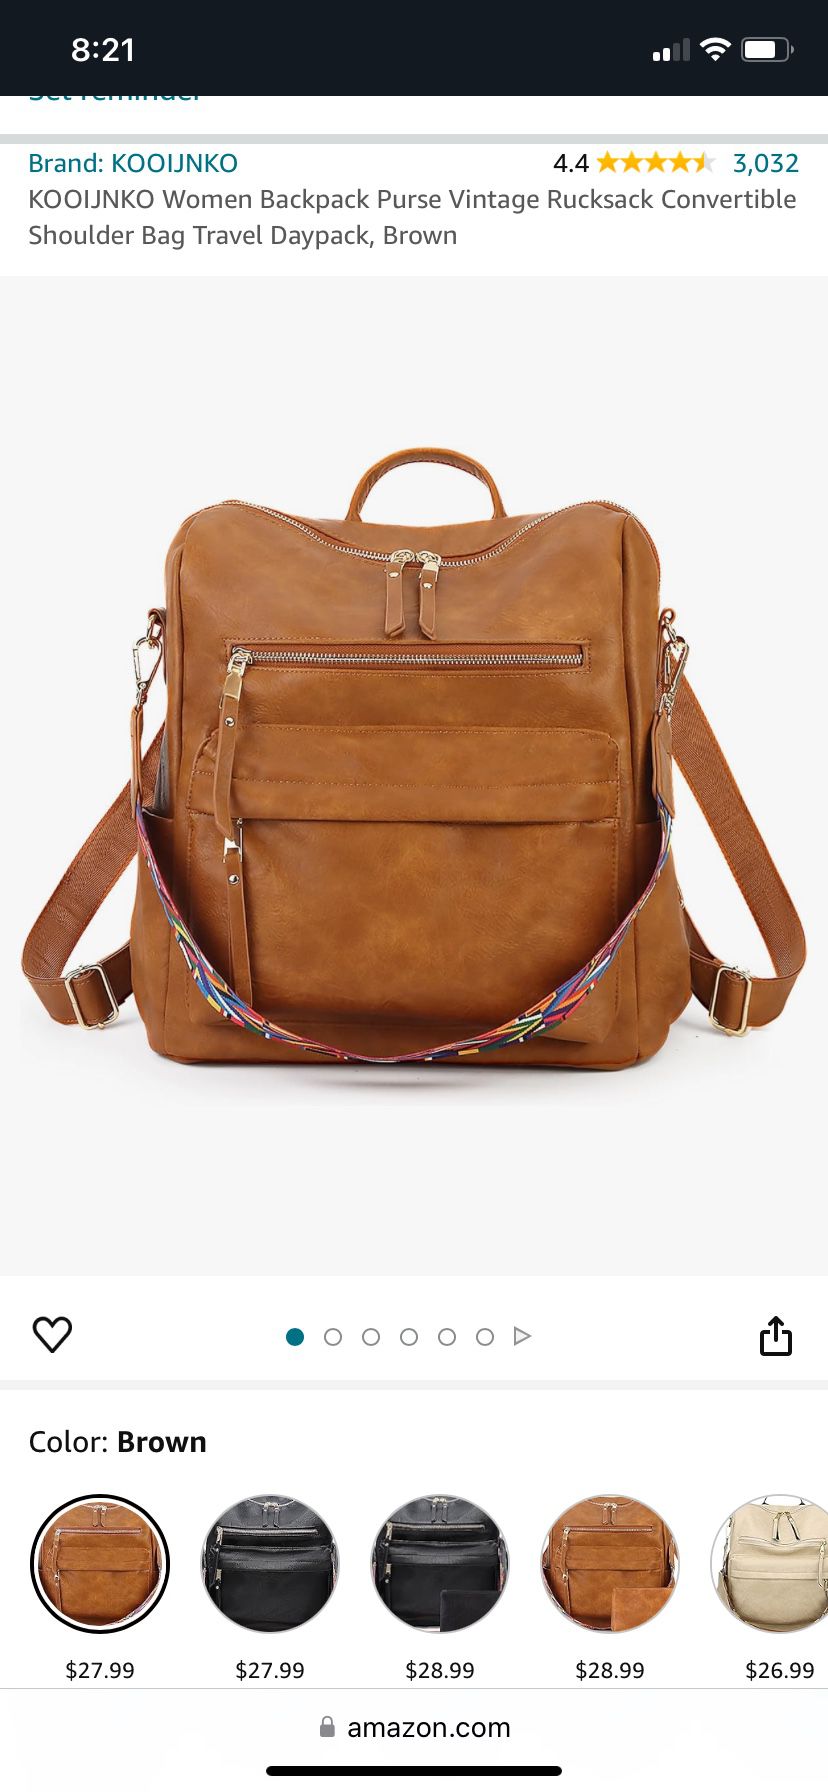 New  Women’s Backpack Purse Convertible Shoulder Bag